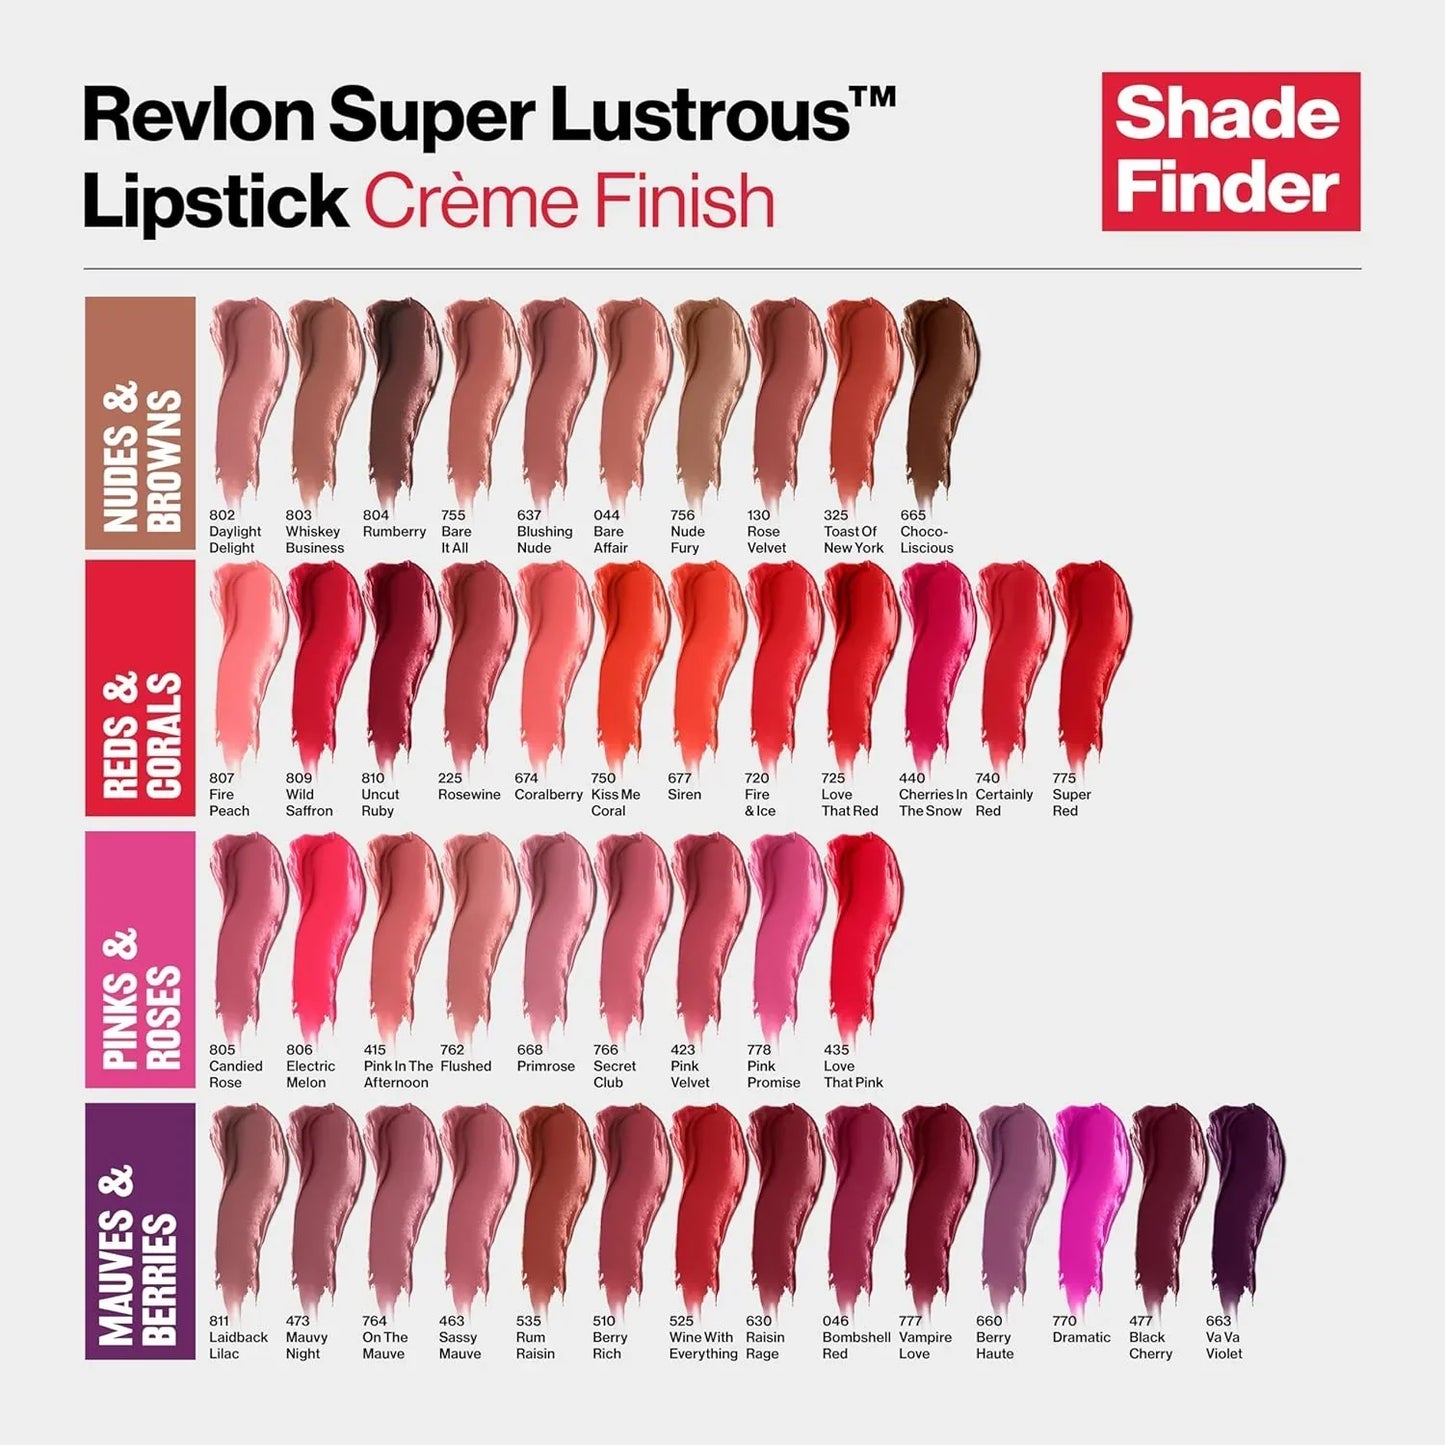 REVLON Super Lustrous Lipstick, Rose & Shine (619)